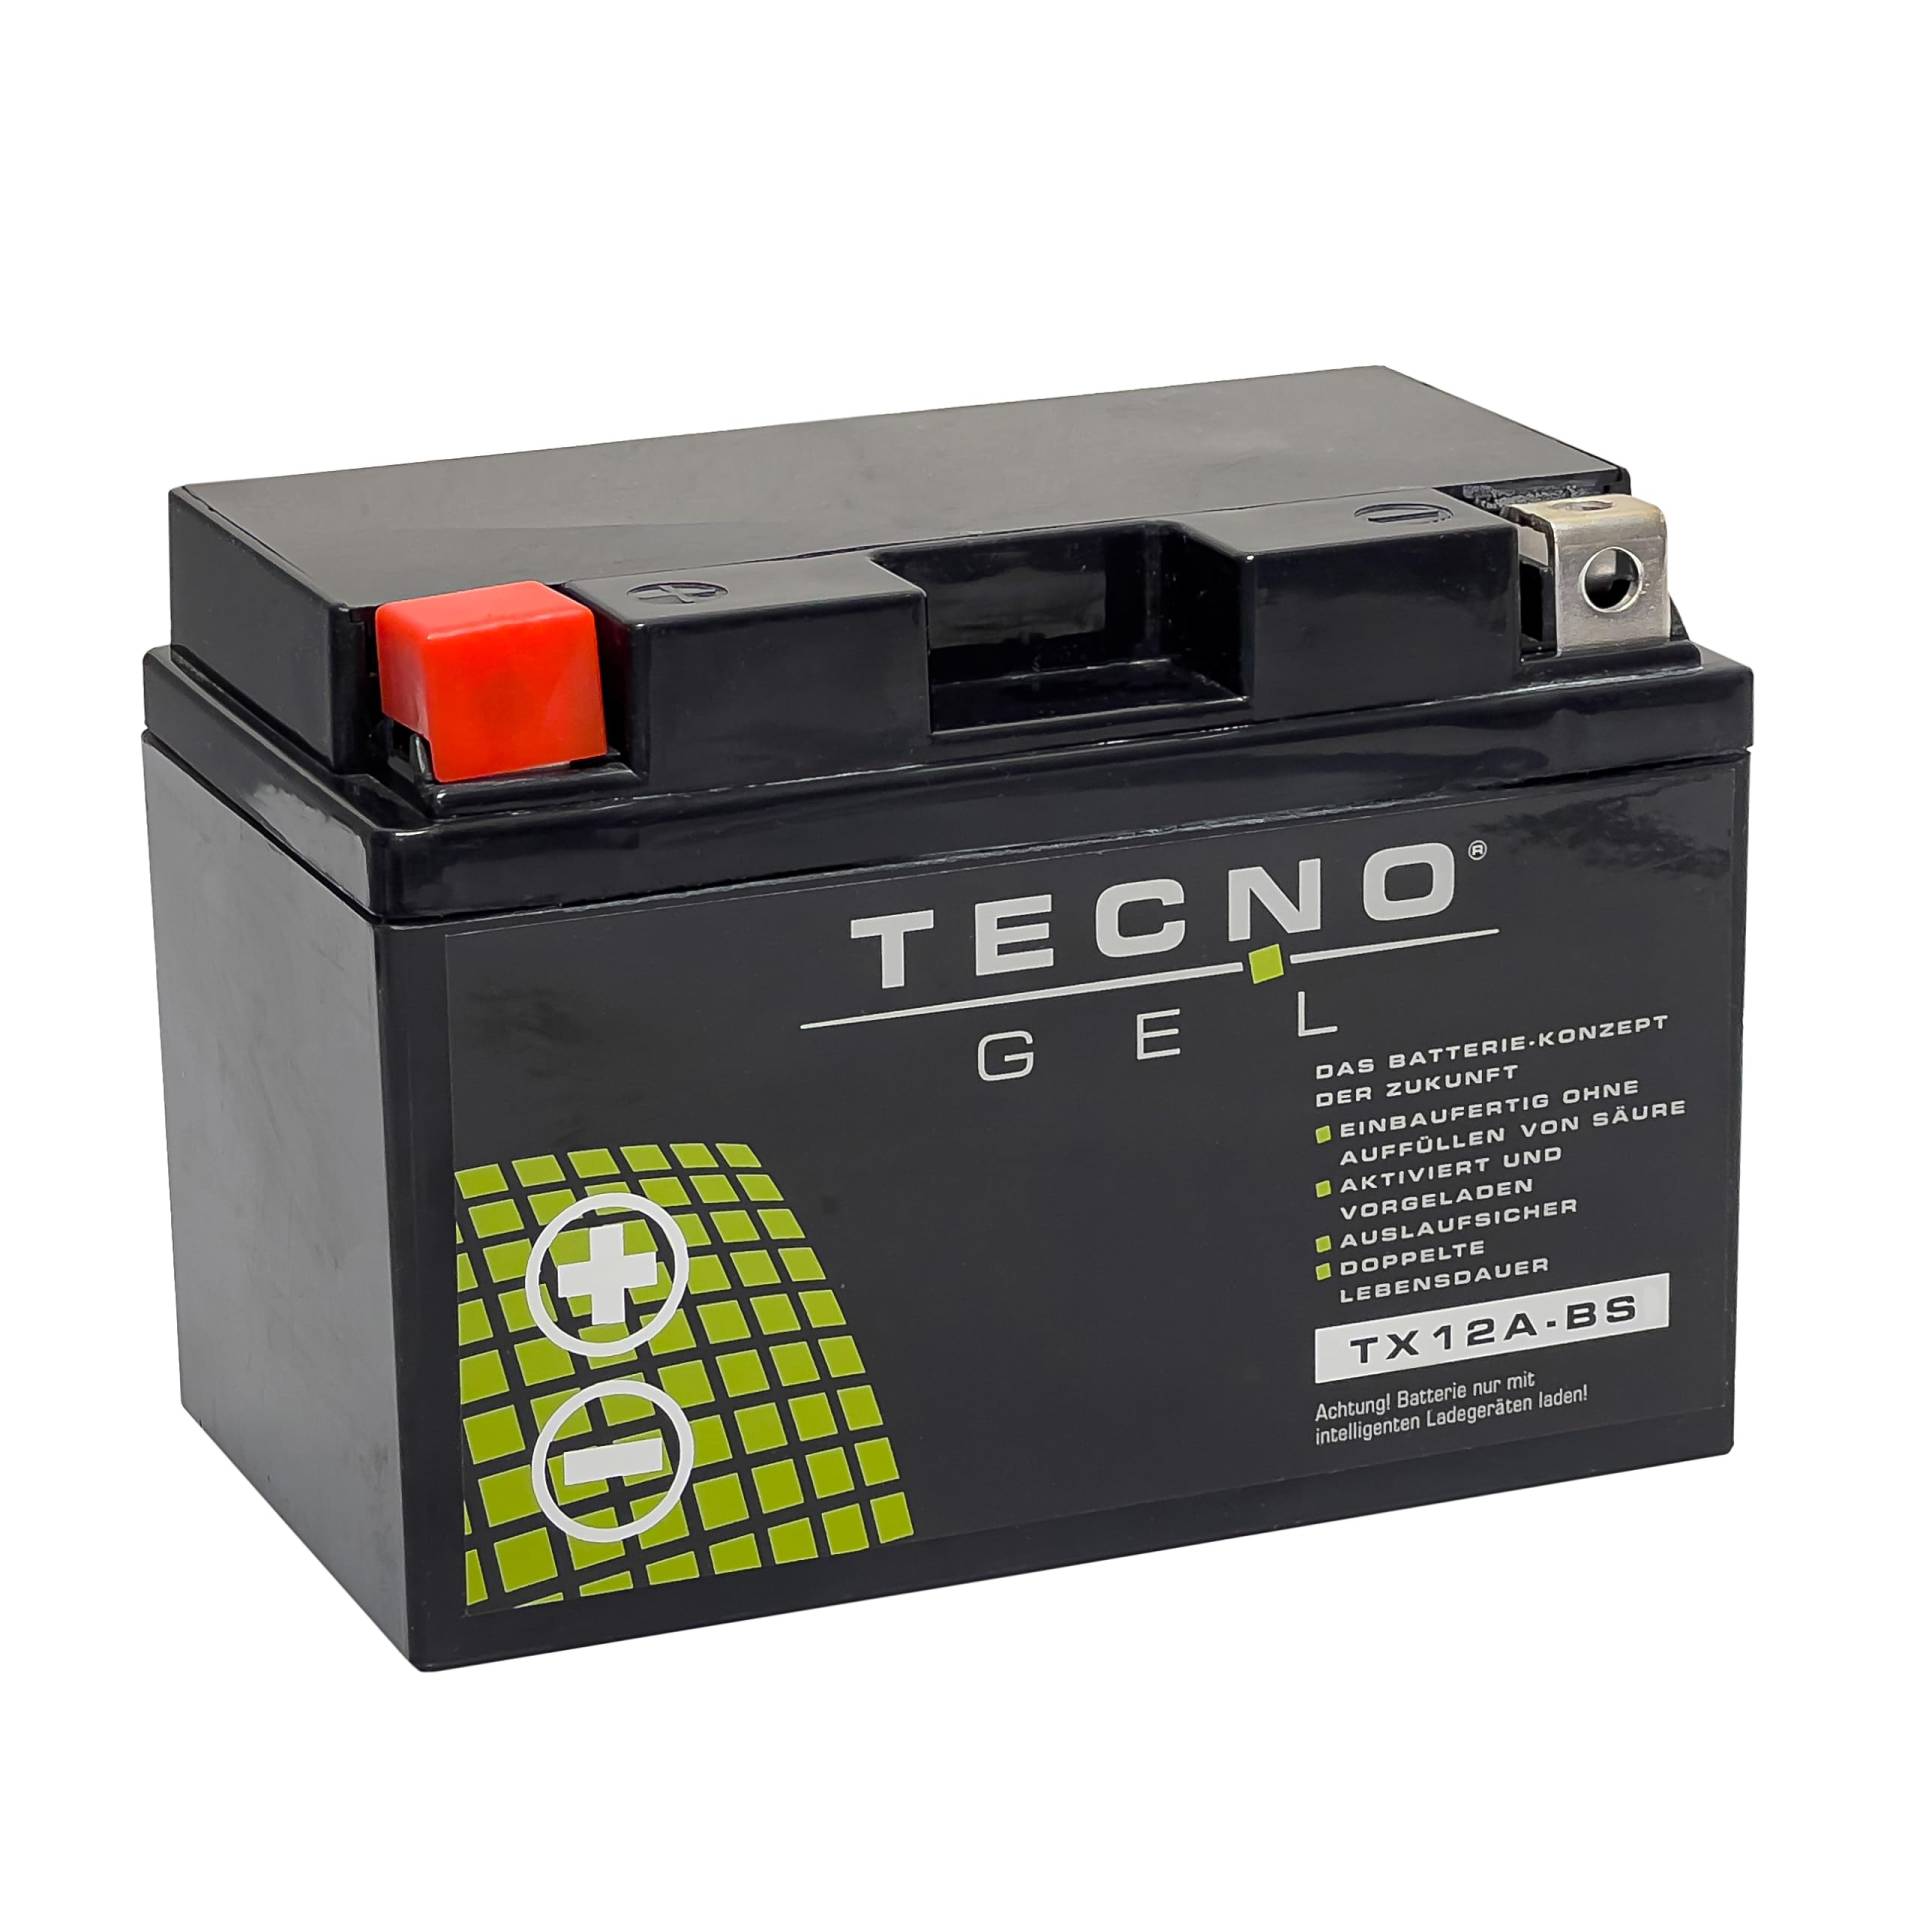 TECNO-GEL Motorrad Qualitäts Batterie für YT12A-BS = YTX12A-BS, 12V Gel-Batterie 10 Ah, 150x87x106 mm von Wirth-Federn